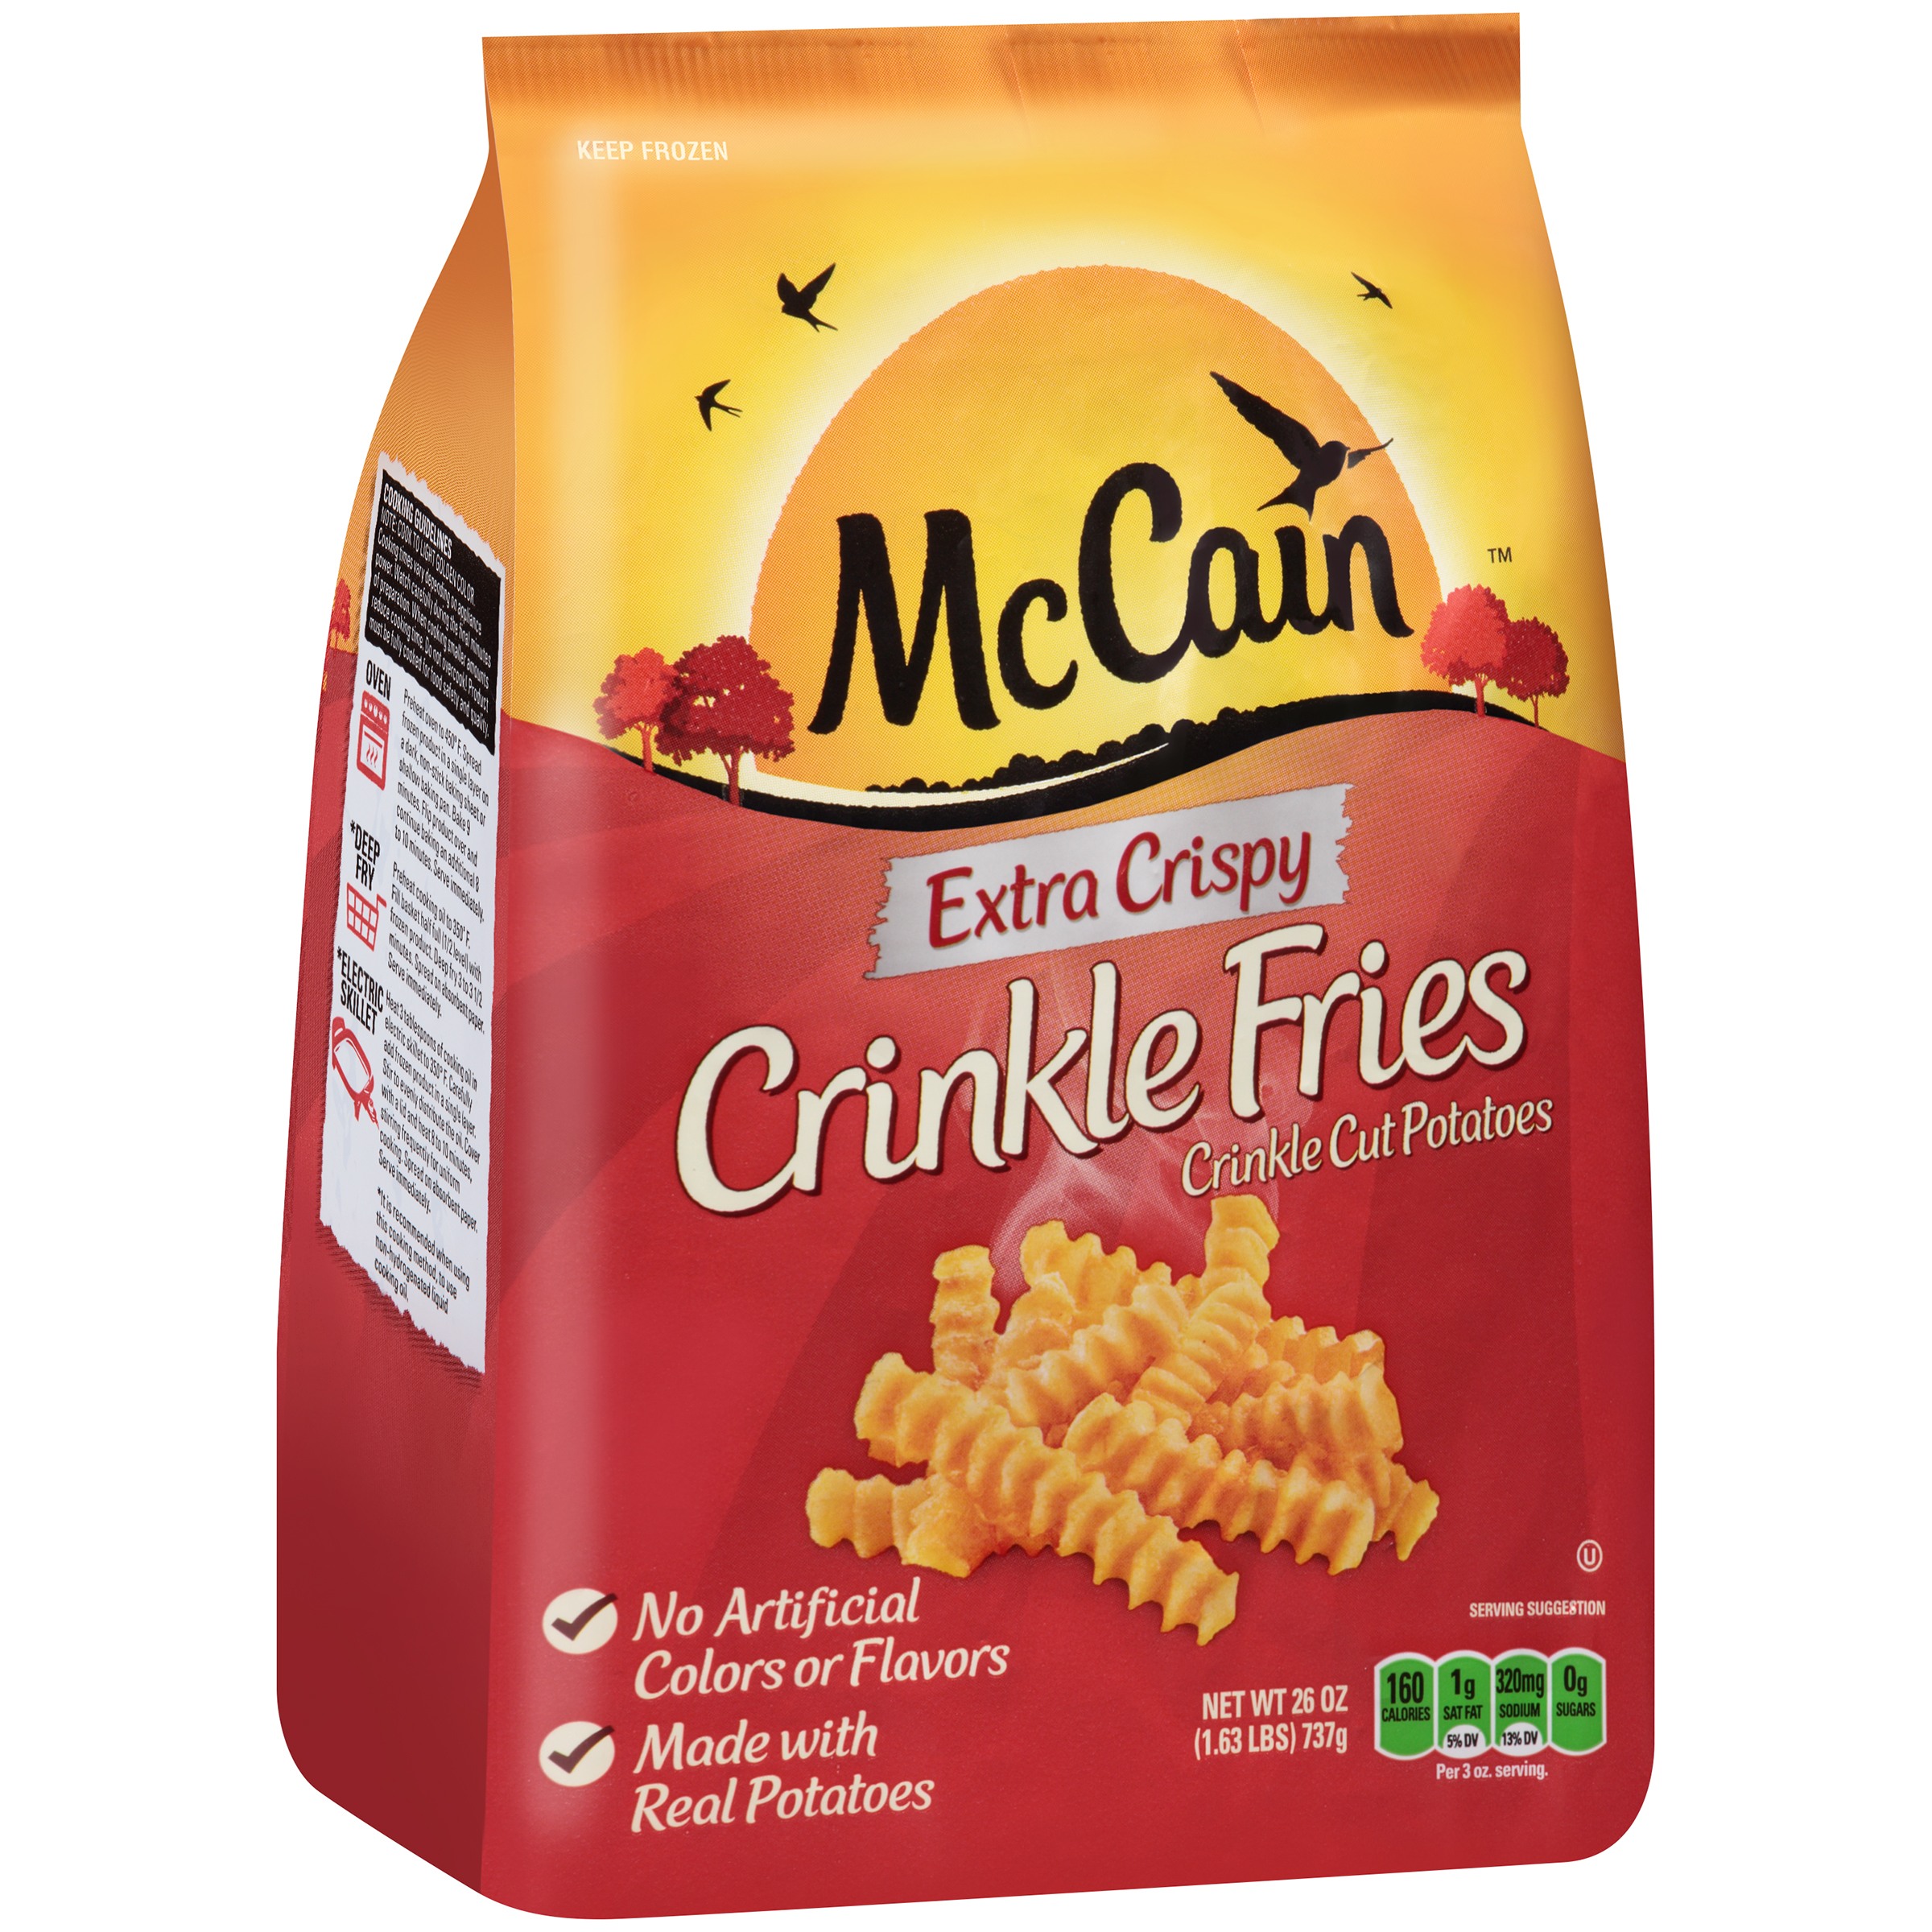 Mccain Extra Crispy Crinkle Fries - image 1 of 8